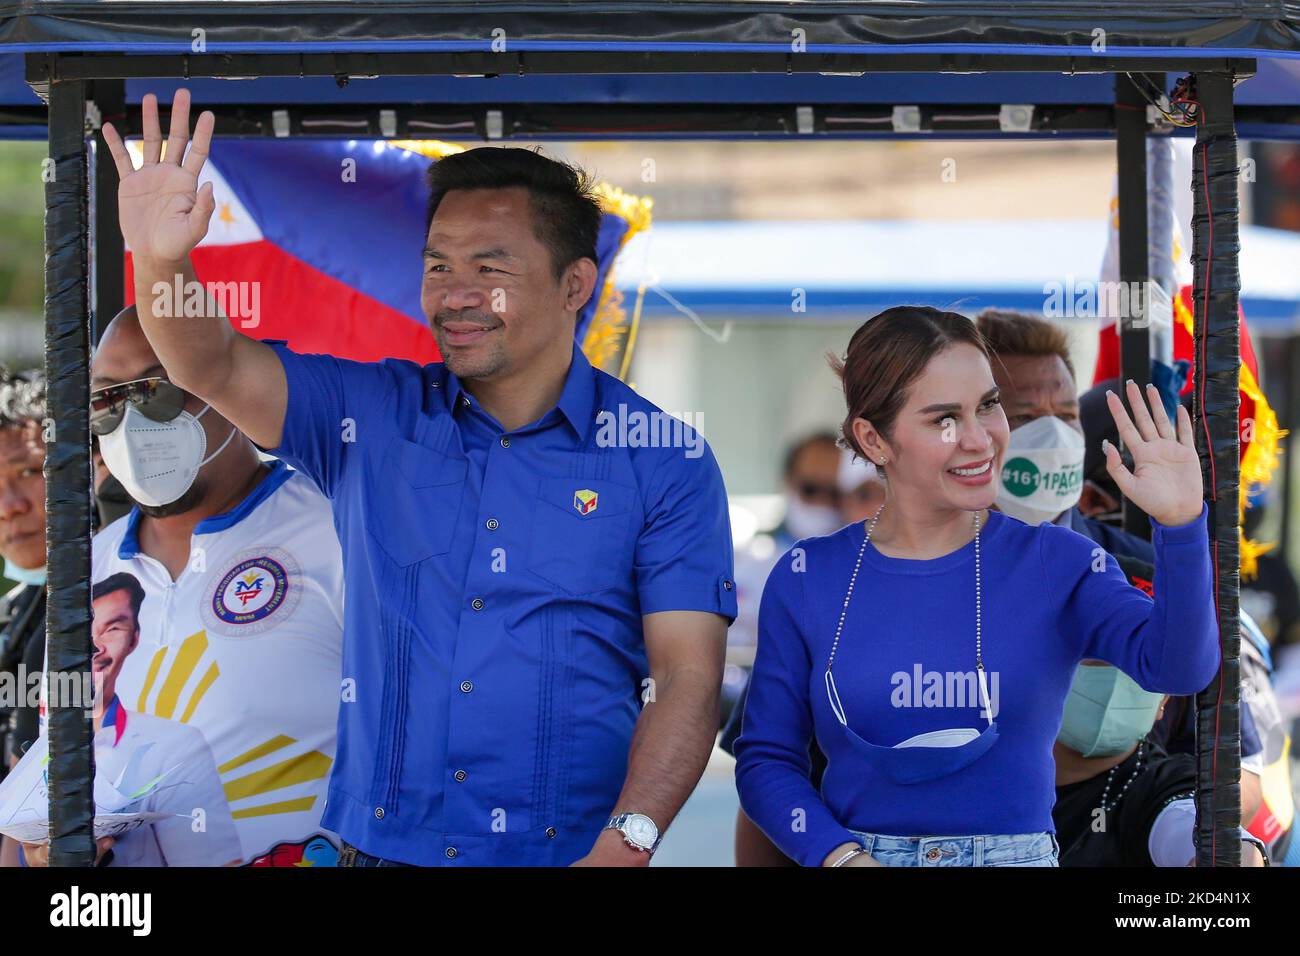 Inquirer в X: „'HAPPY MAMA' LOOK: Jinkee Pacquiao reunites with